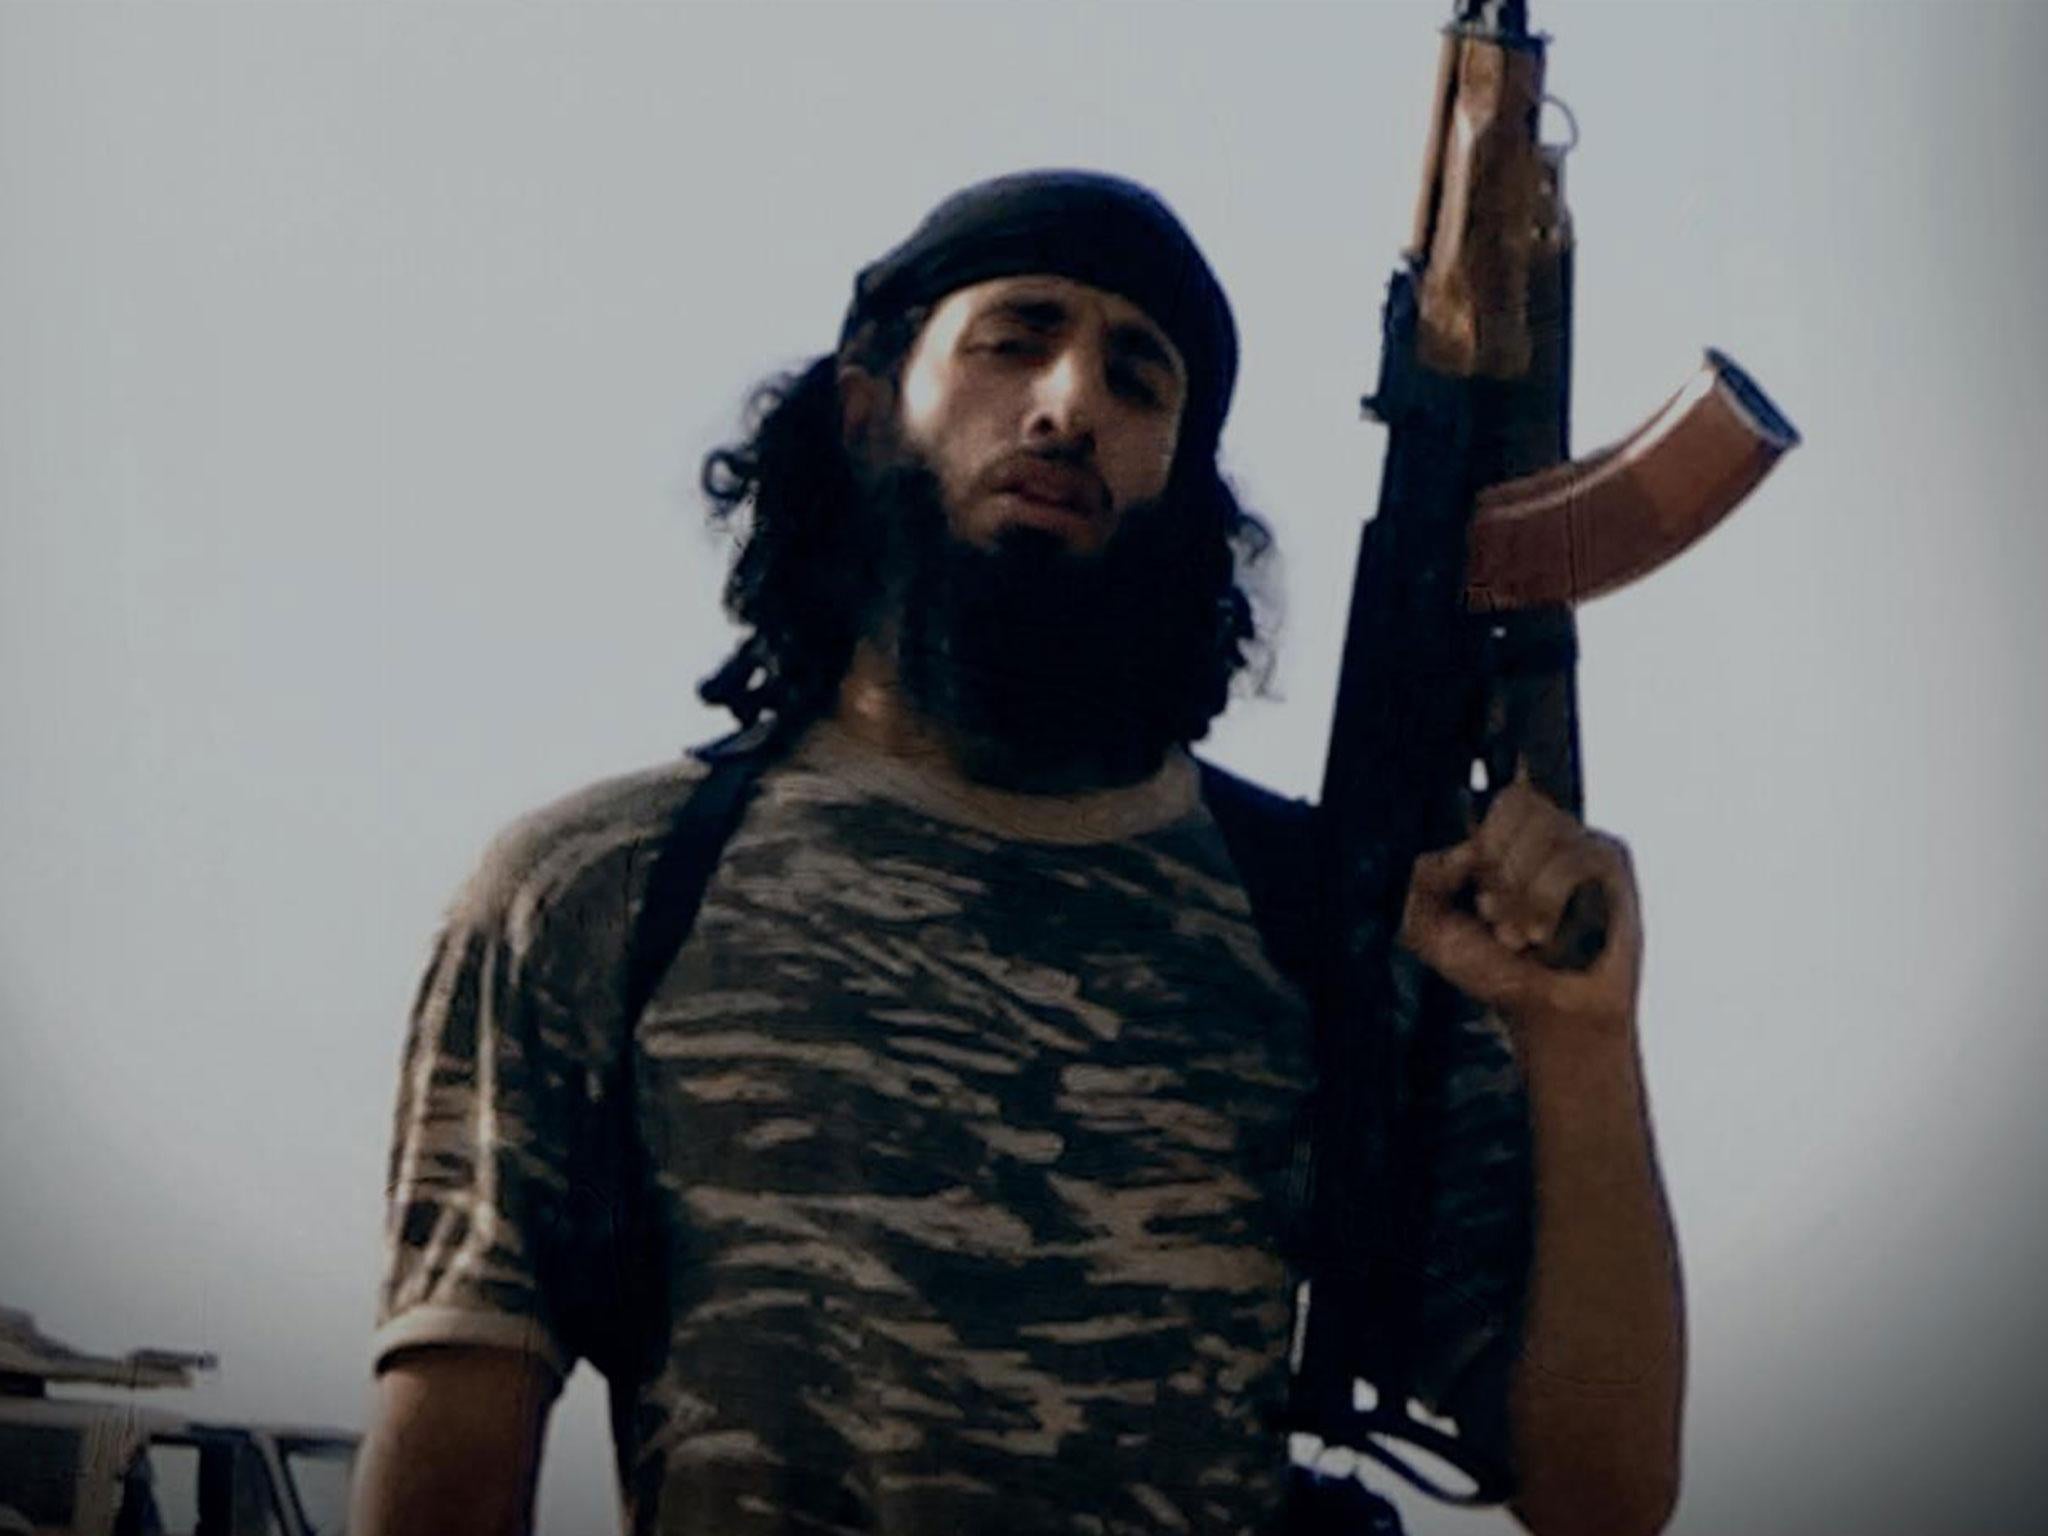 Mohammed Emwazi, the terrorist known as Jihadi John, was a British convert to Isis